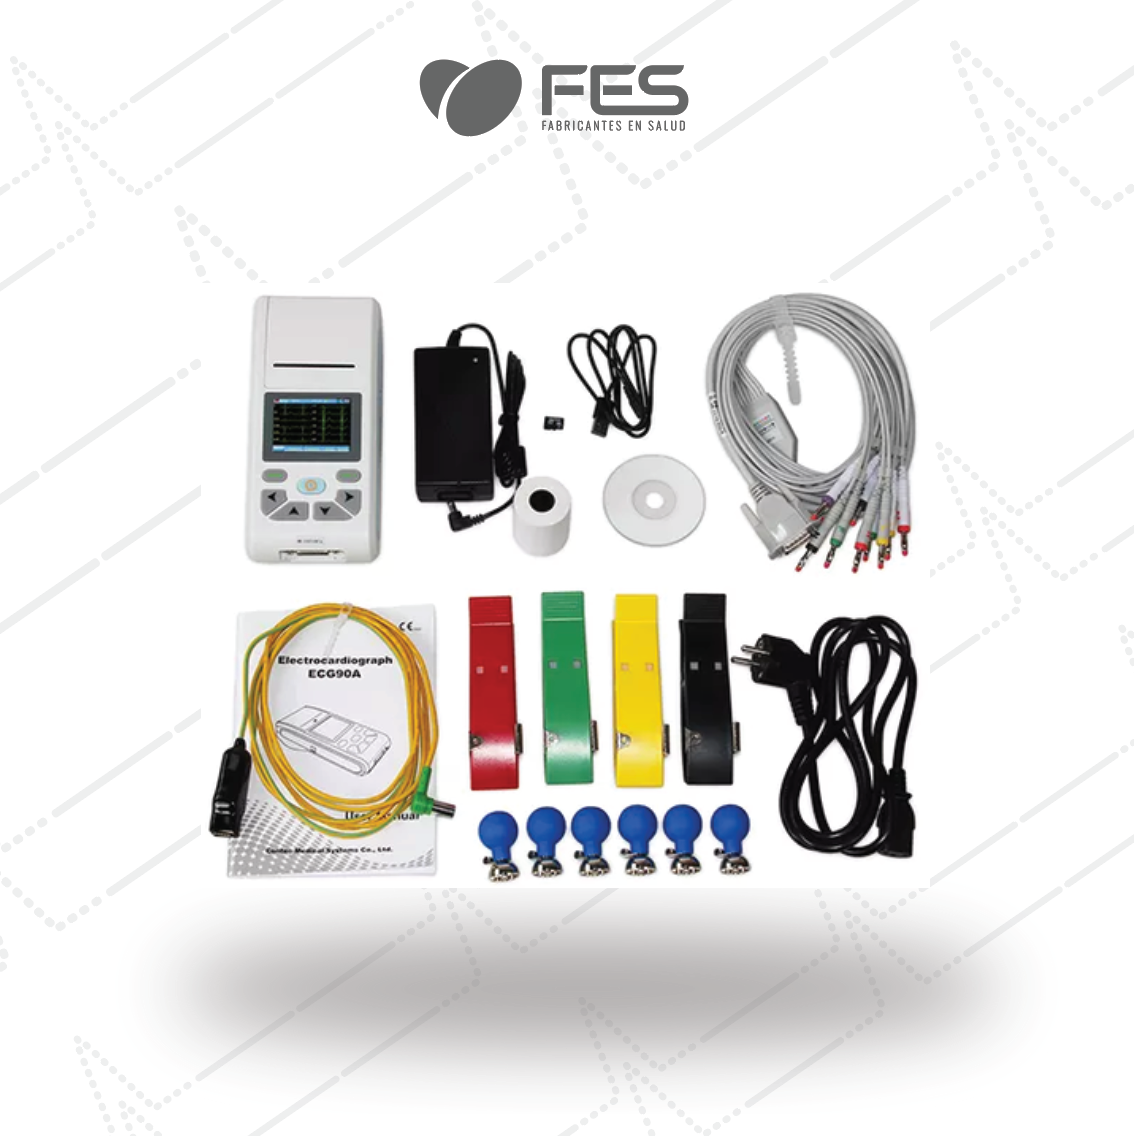 Electrocardiógrafo portátil Mobiclinic ECG90A 3 canales a bateria